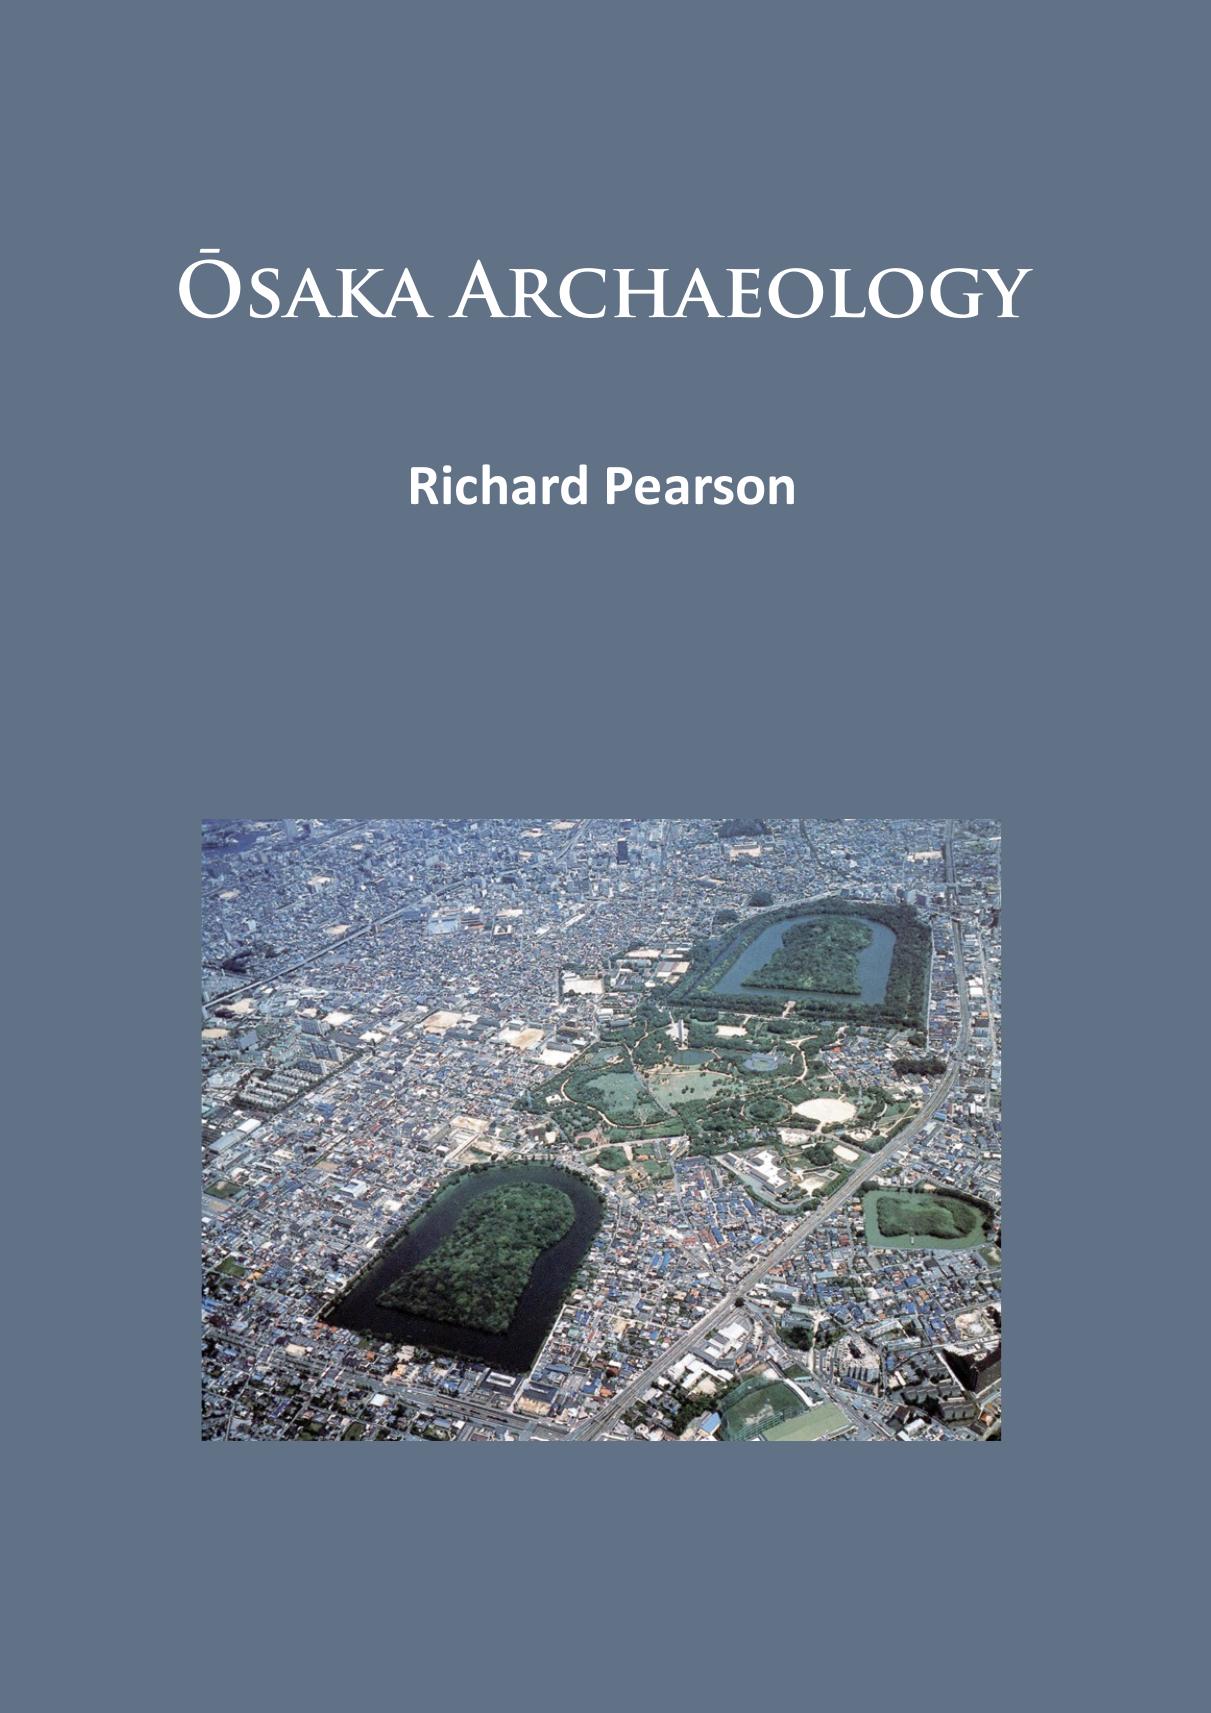 Åsaka Archaeology by Richard Pearson